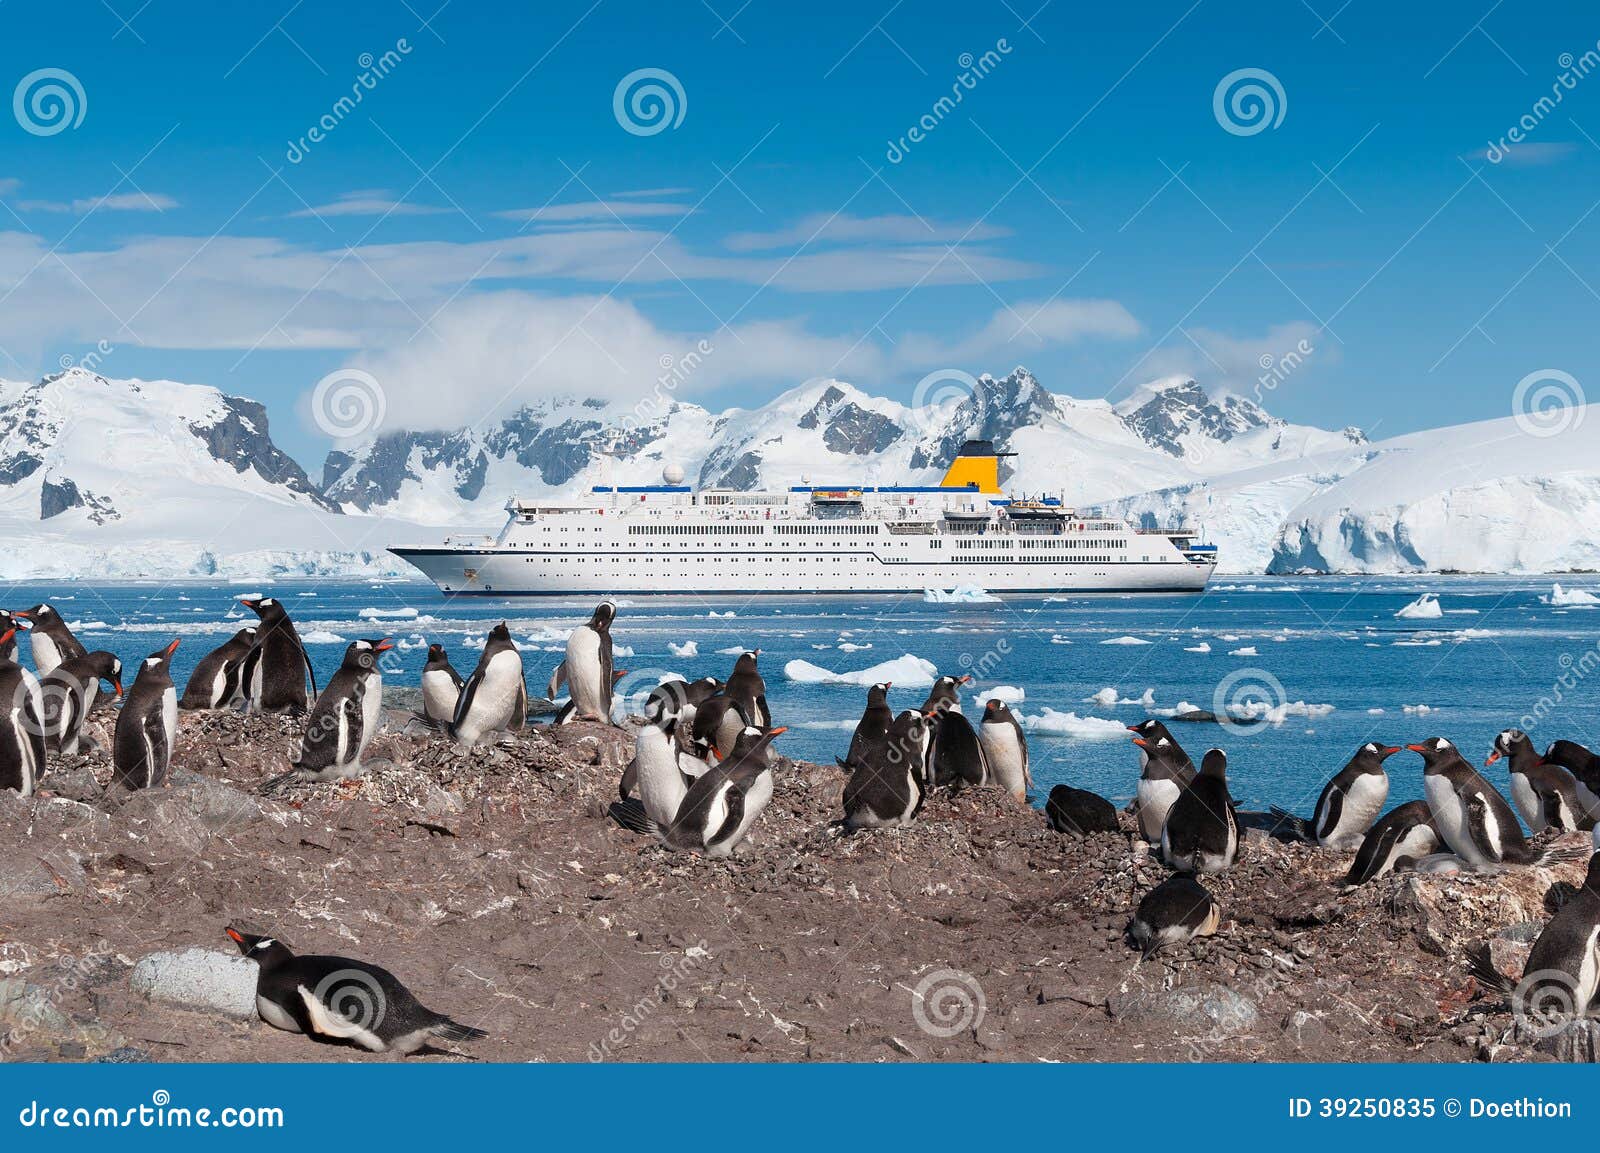 antarctica penguins and cruise ship